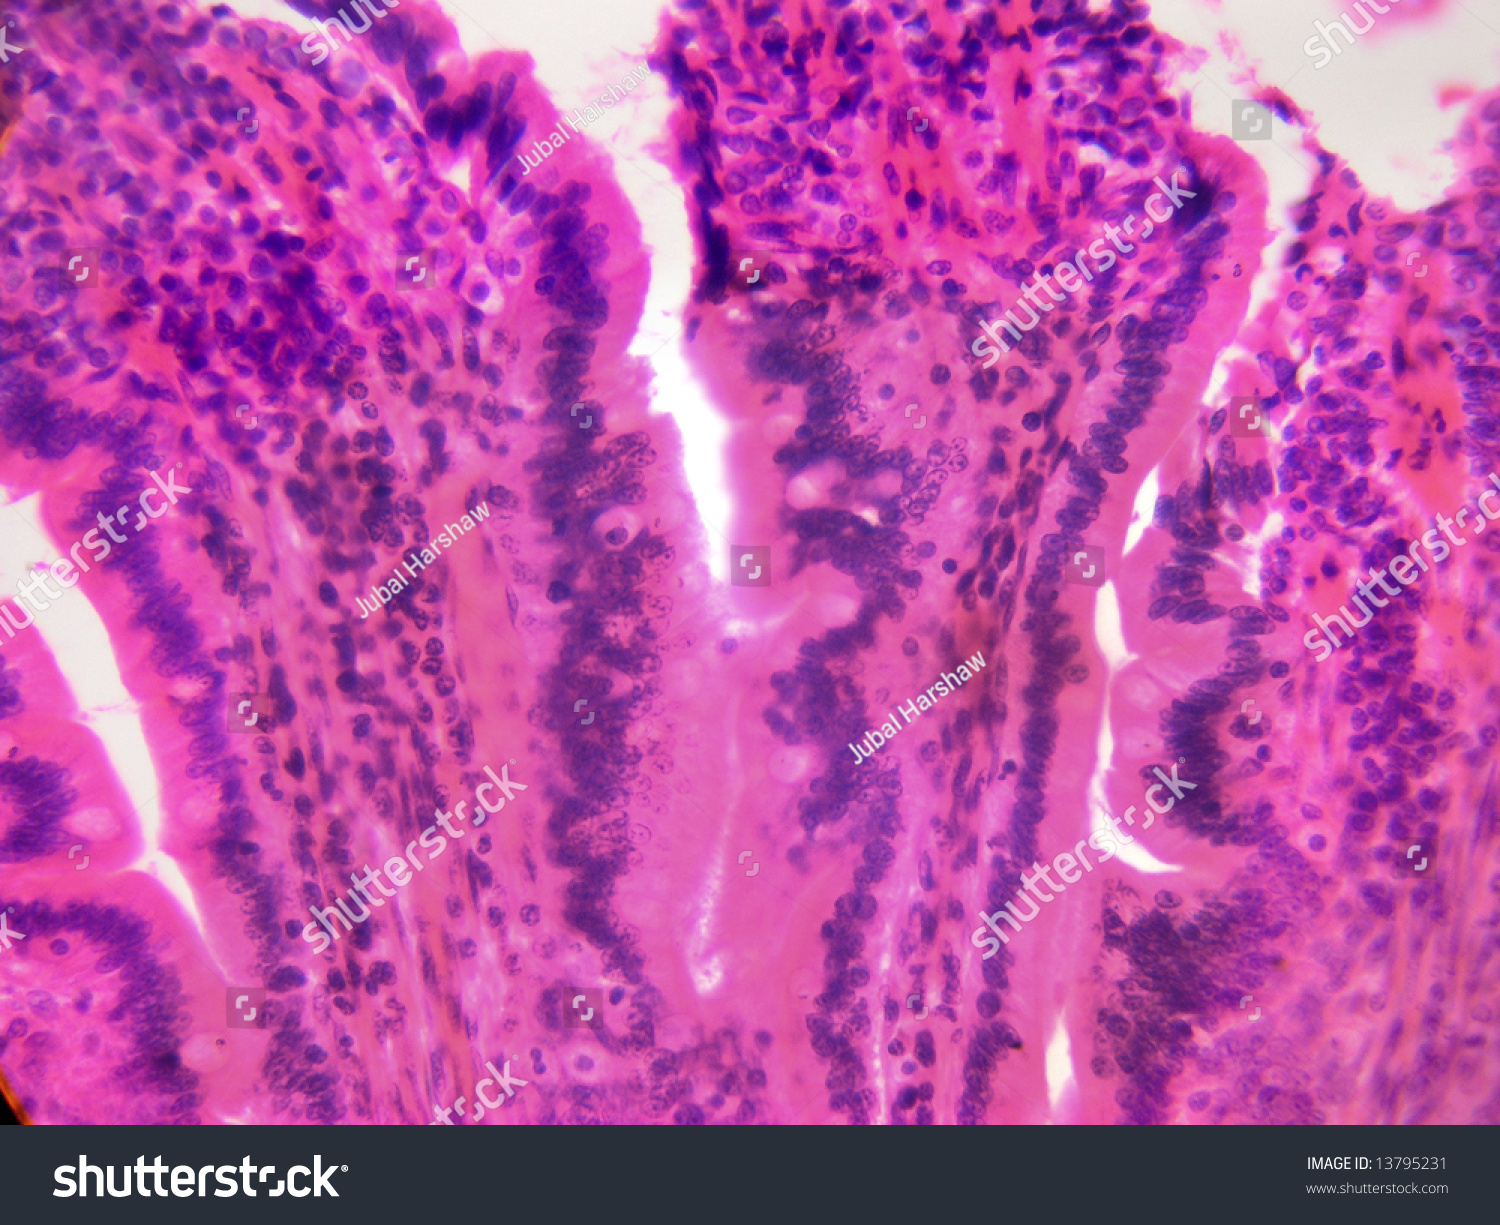 Stomach Tissue Microscopic High Power Stock Photo 13795231 - Shutterstock